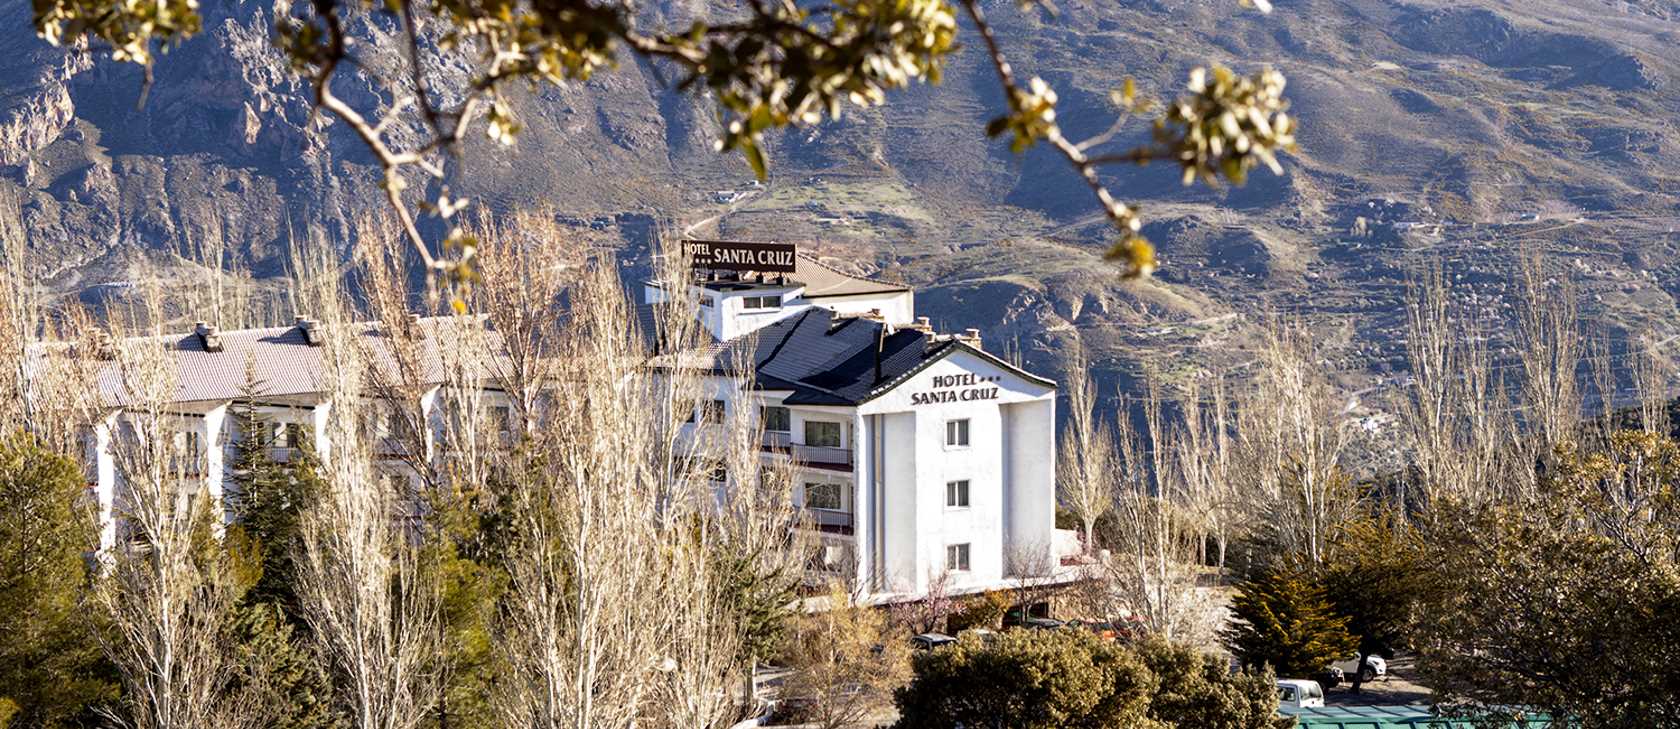 Hotel Barato Sierra Nevada (Sierra Nevada - GRANADA)